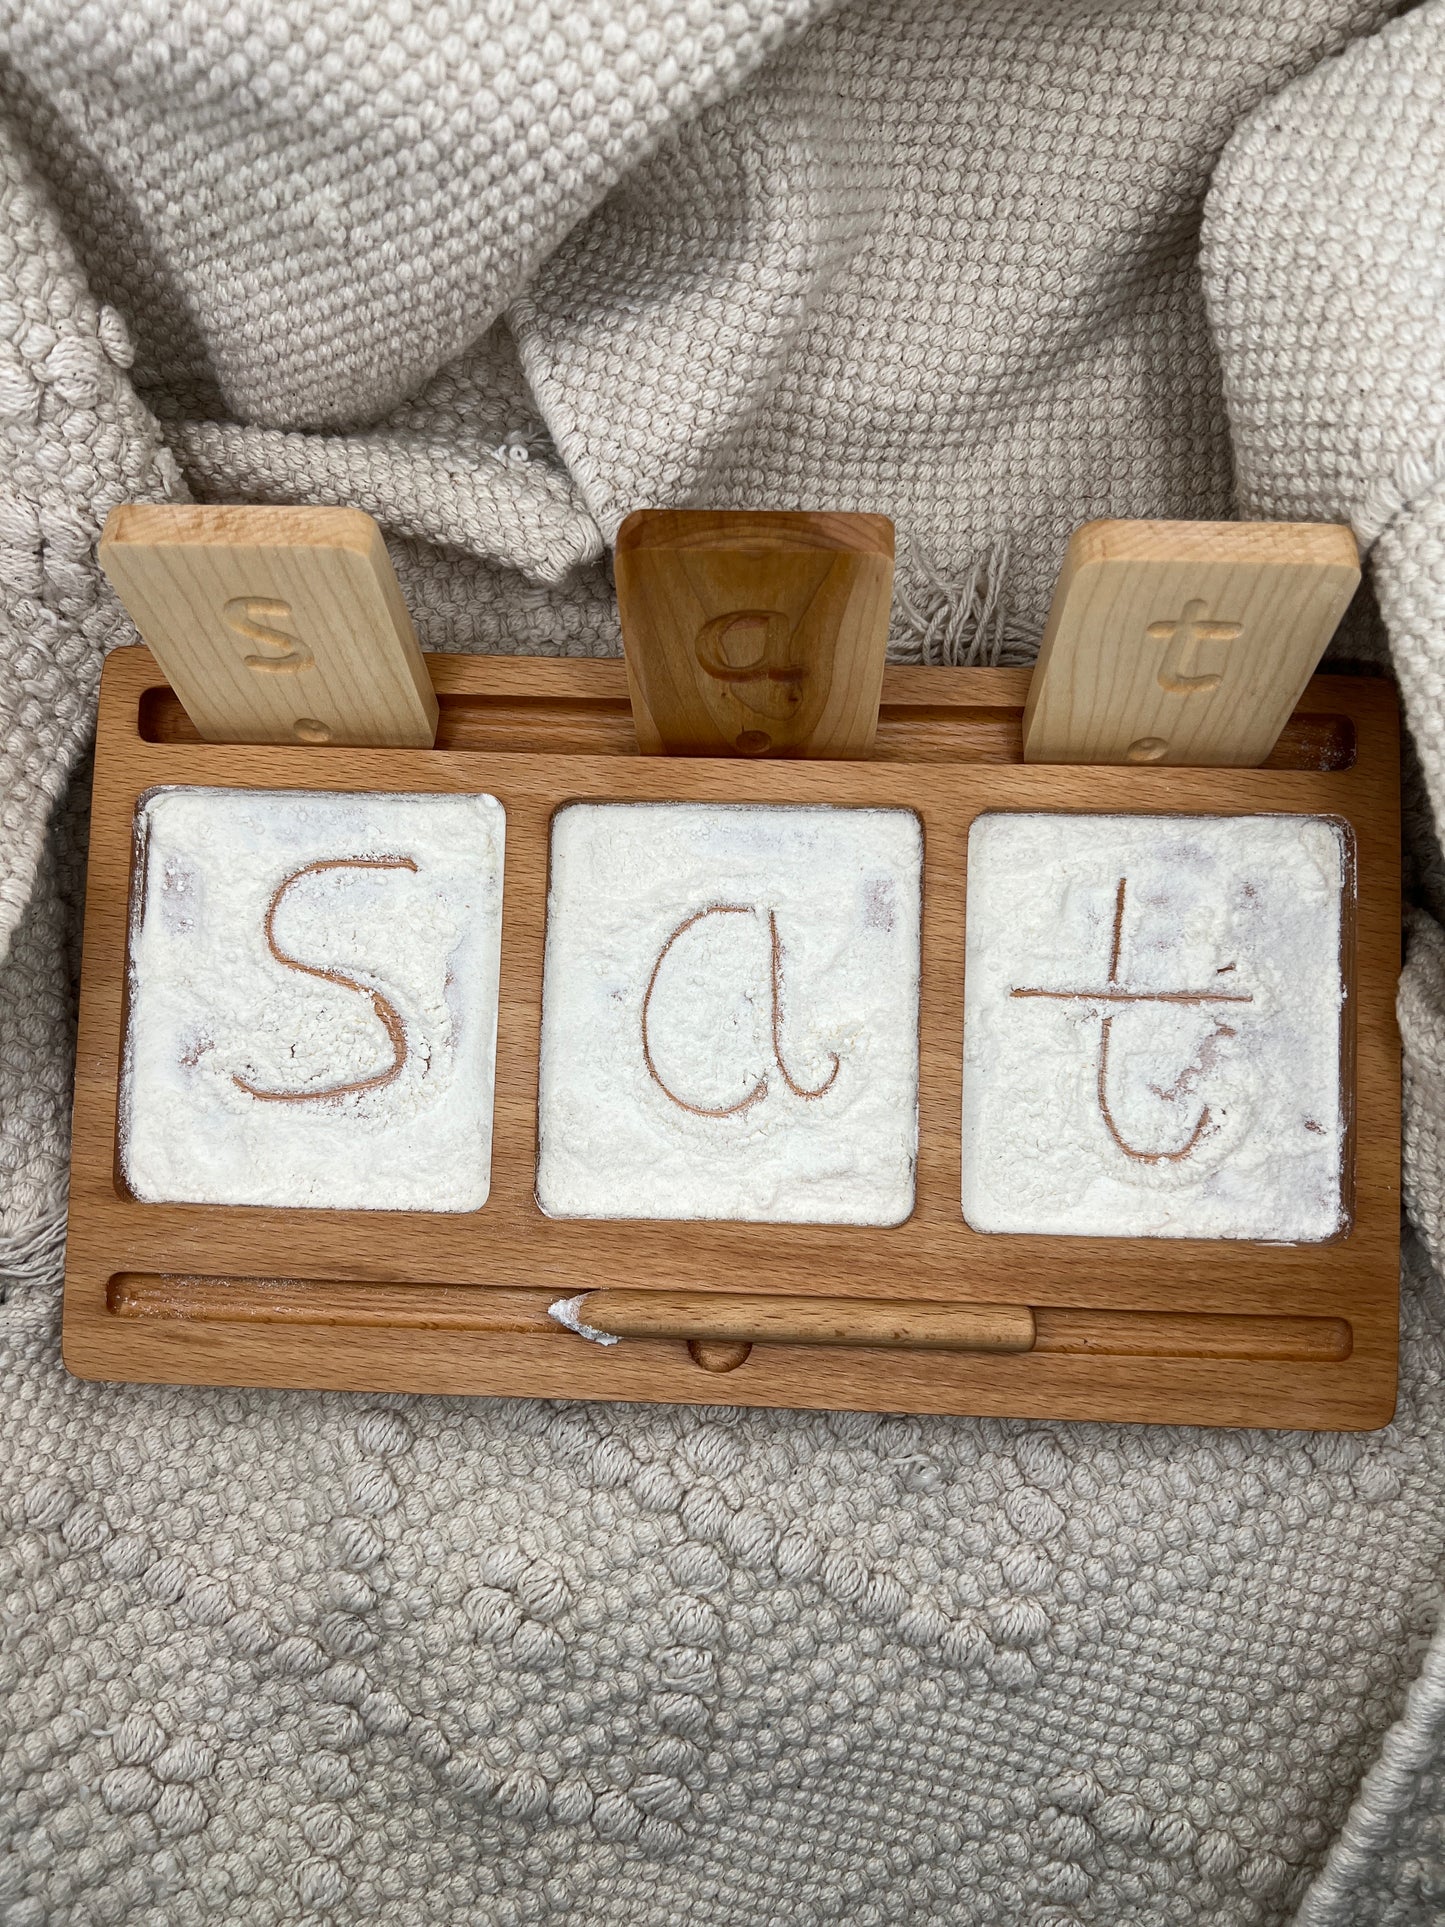 montessorri inspired wooden mark making tray for letter formation NEW